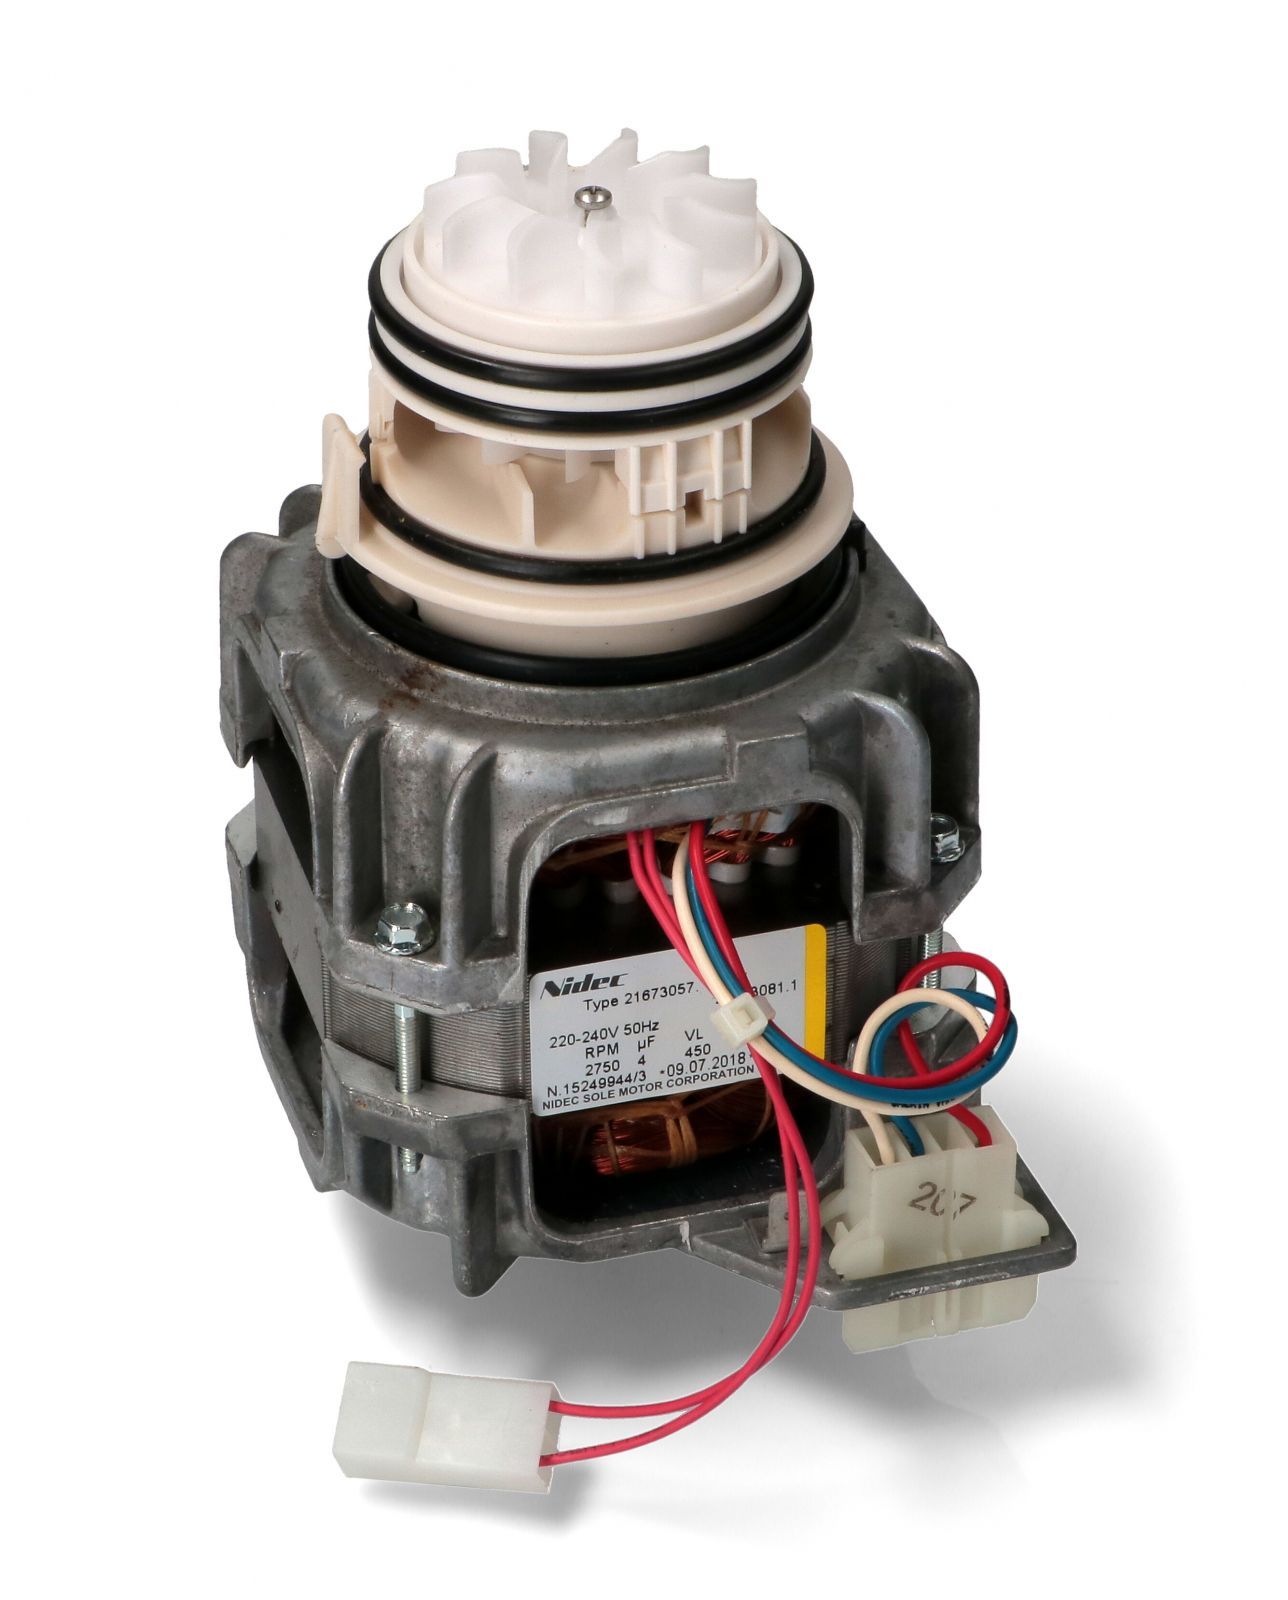 Complete Pump Set for Electrolux AEG Zanussi Dishwashers - 50273432000 AEG / Electrolux / Zanussi